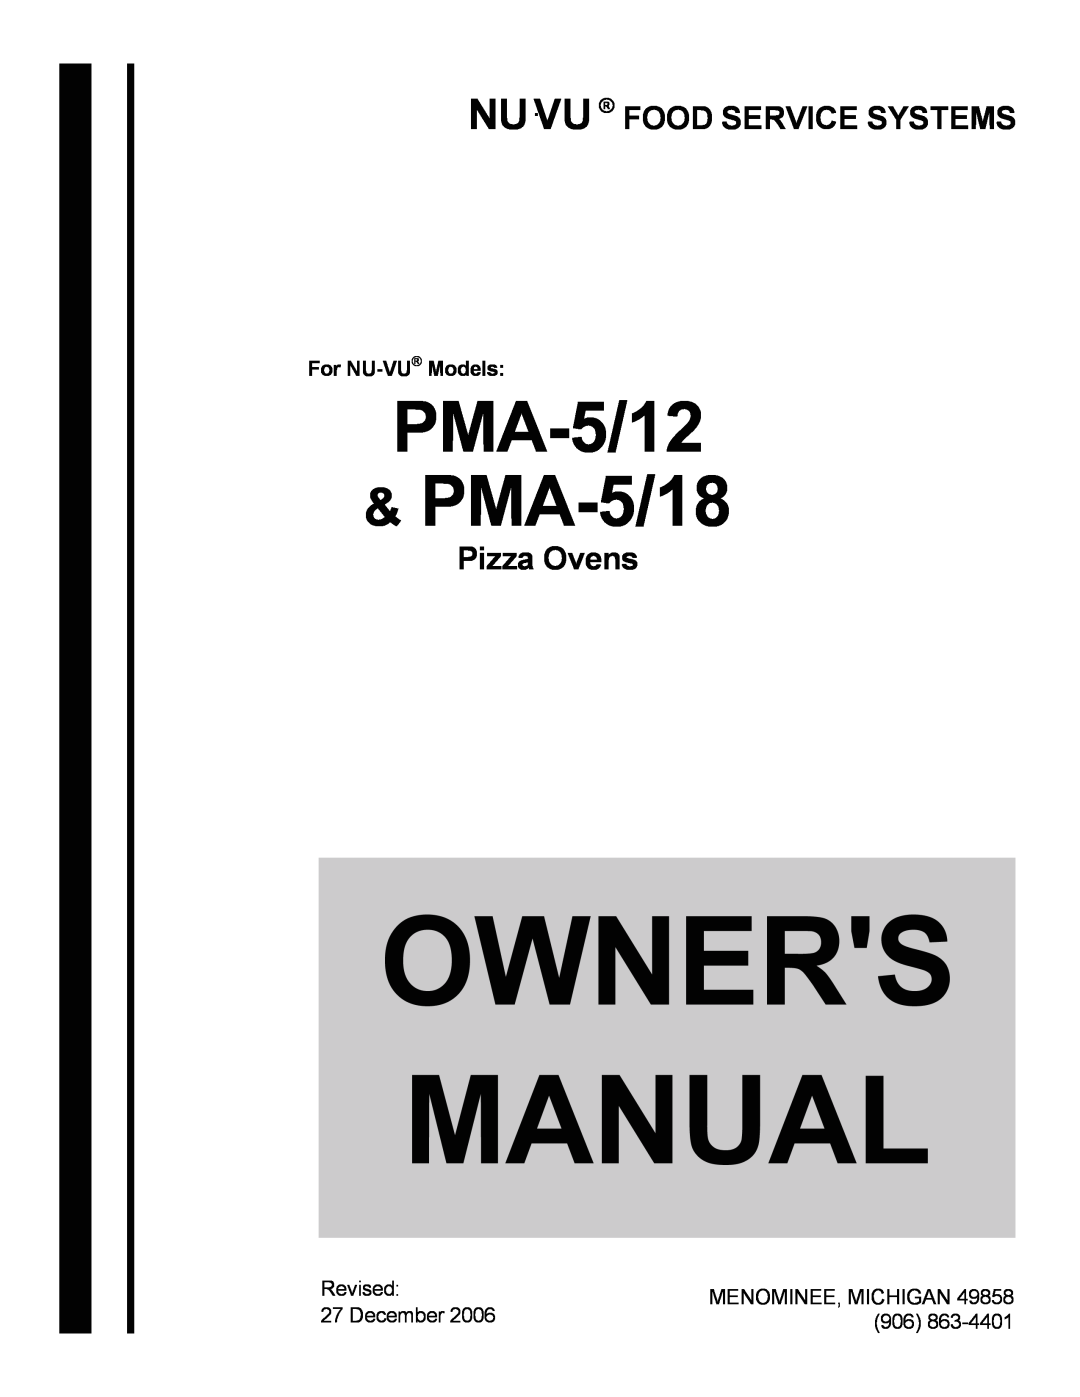 Nu-Vu PMA -5/12, PMA 5/18 owner manual Nu ·Vu Food Service Systems, Pizza Ovens, For NU-VU Models, PMA-5/12 &PMA-5/18 